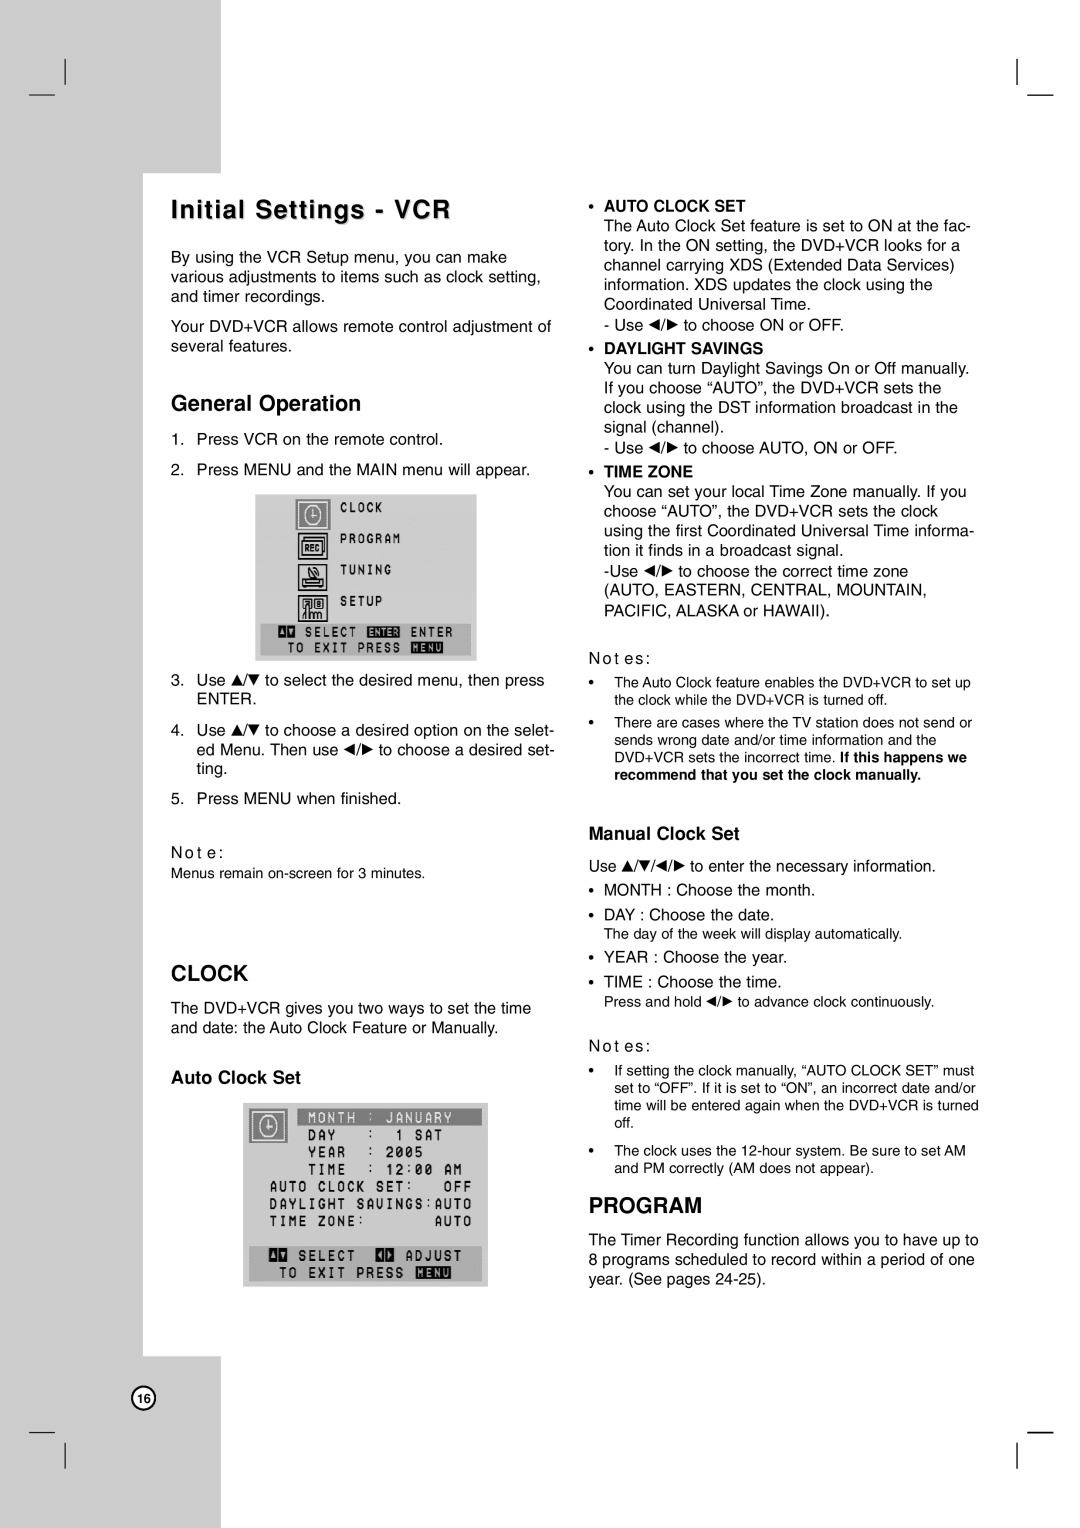 LG Electronics LDX-514 Initial Settings - VCR, General Operation, Program, Auto Clock Set, Manual Clock Set 